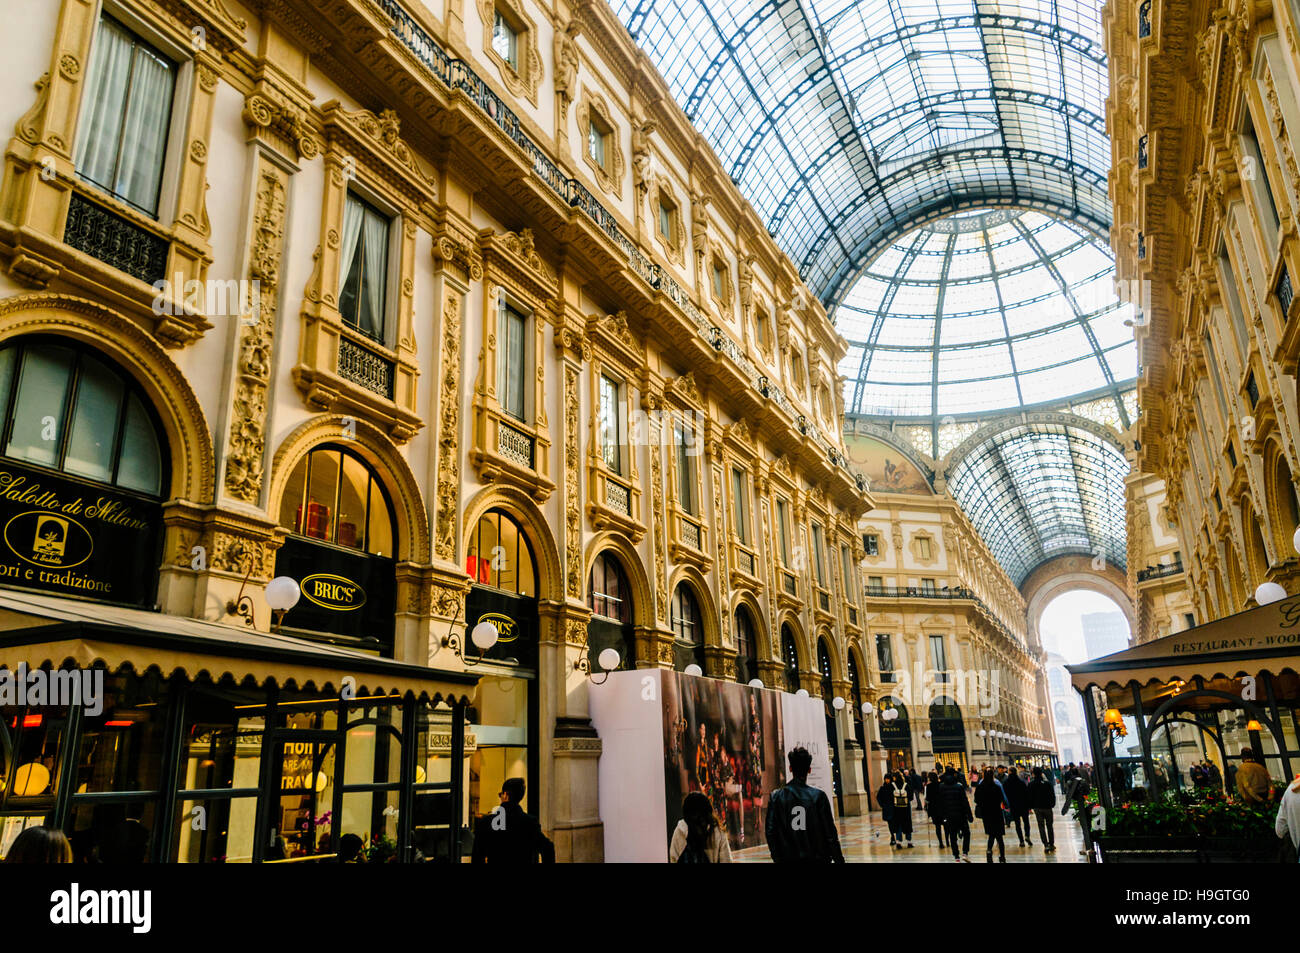 Galleria Vittorio Emanuele II - Shopping arcade in Milan